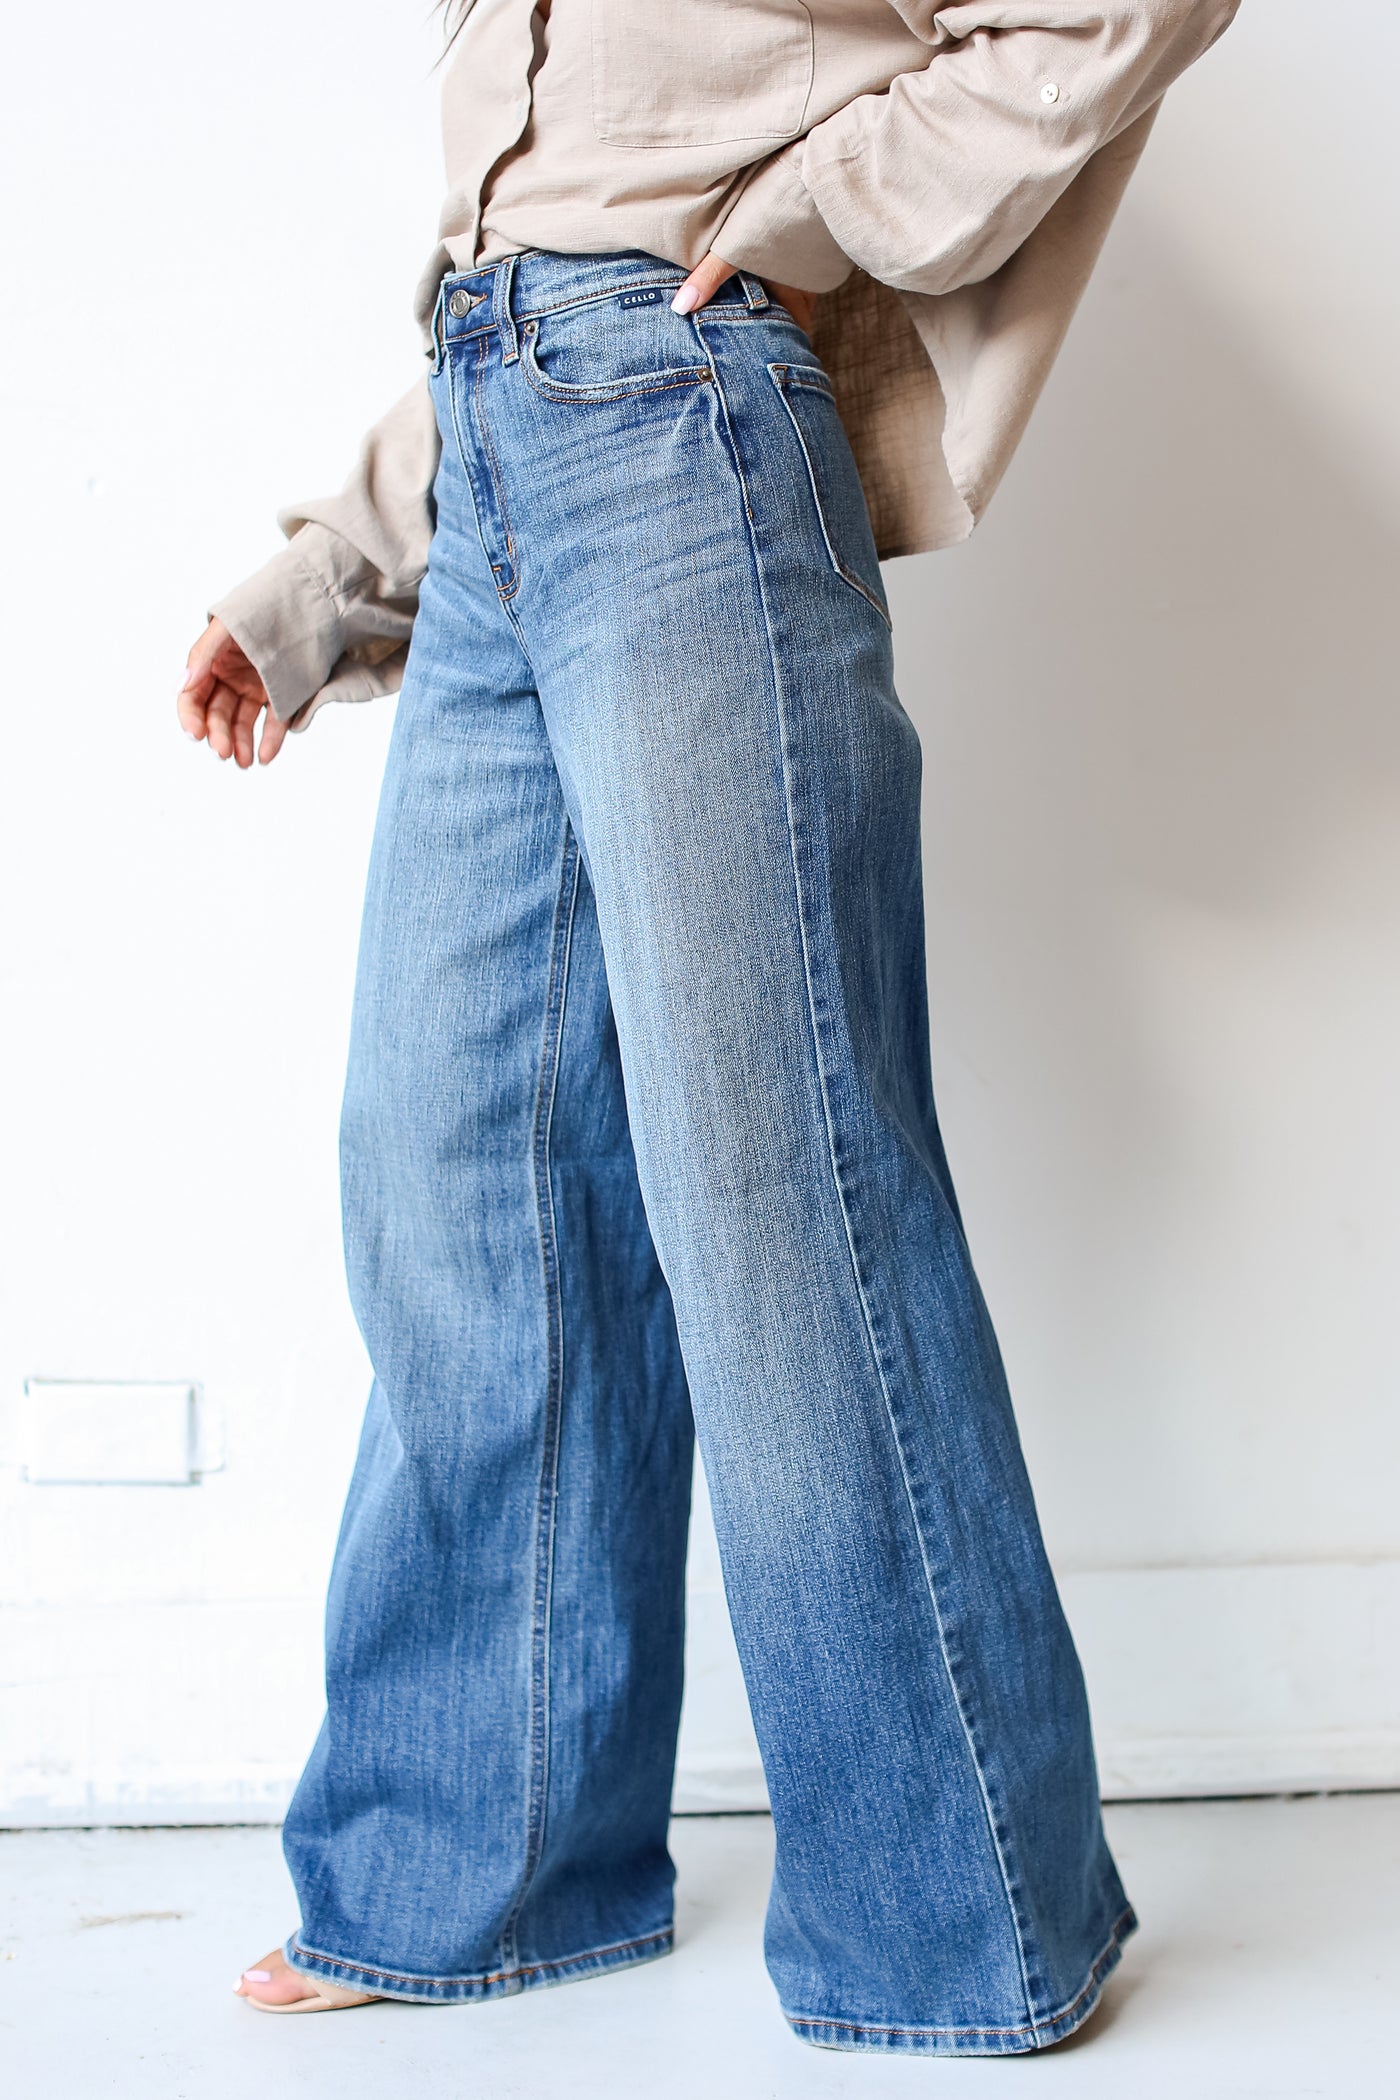 – ShopDressUp Jeans Leg Trendy Medium Dress | Wash Up Wide